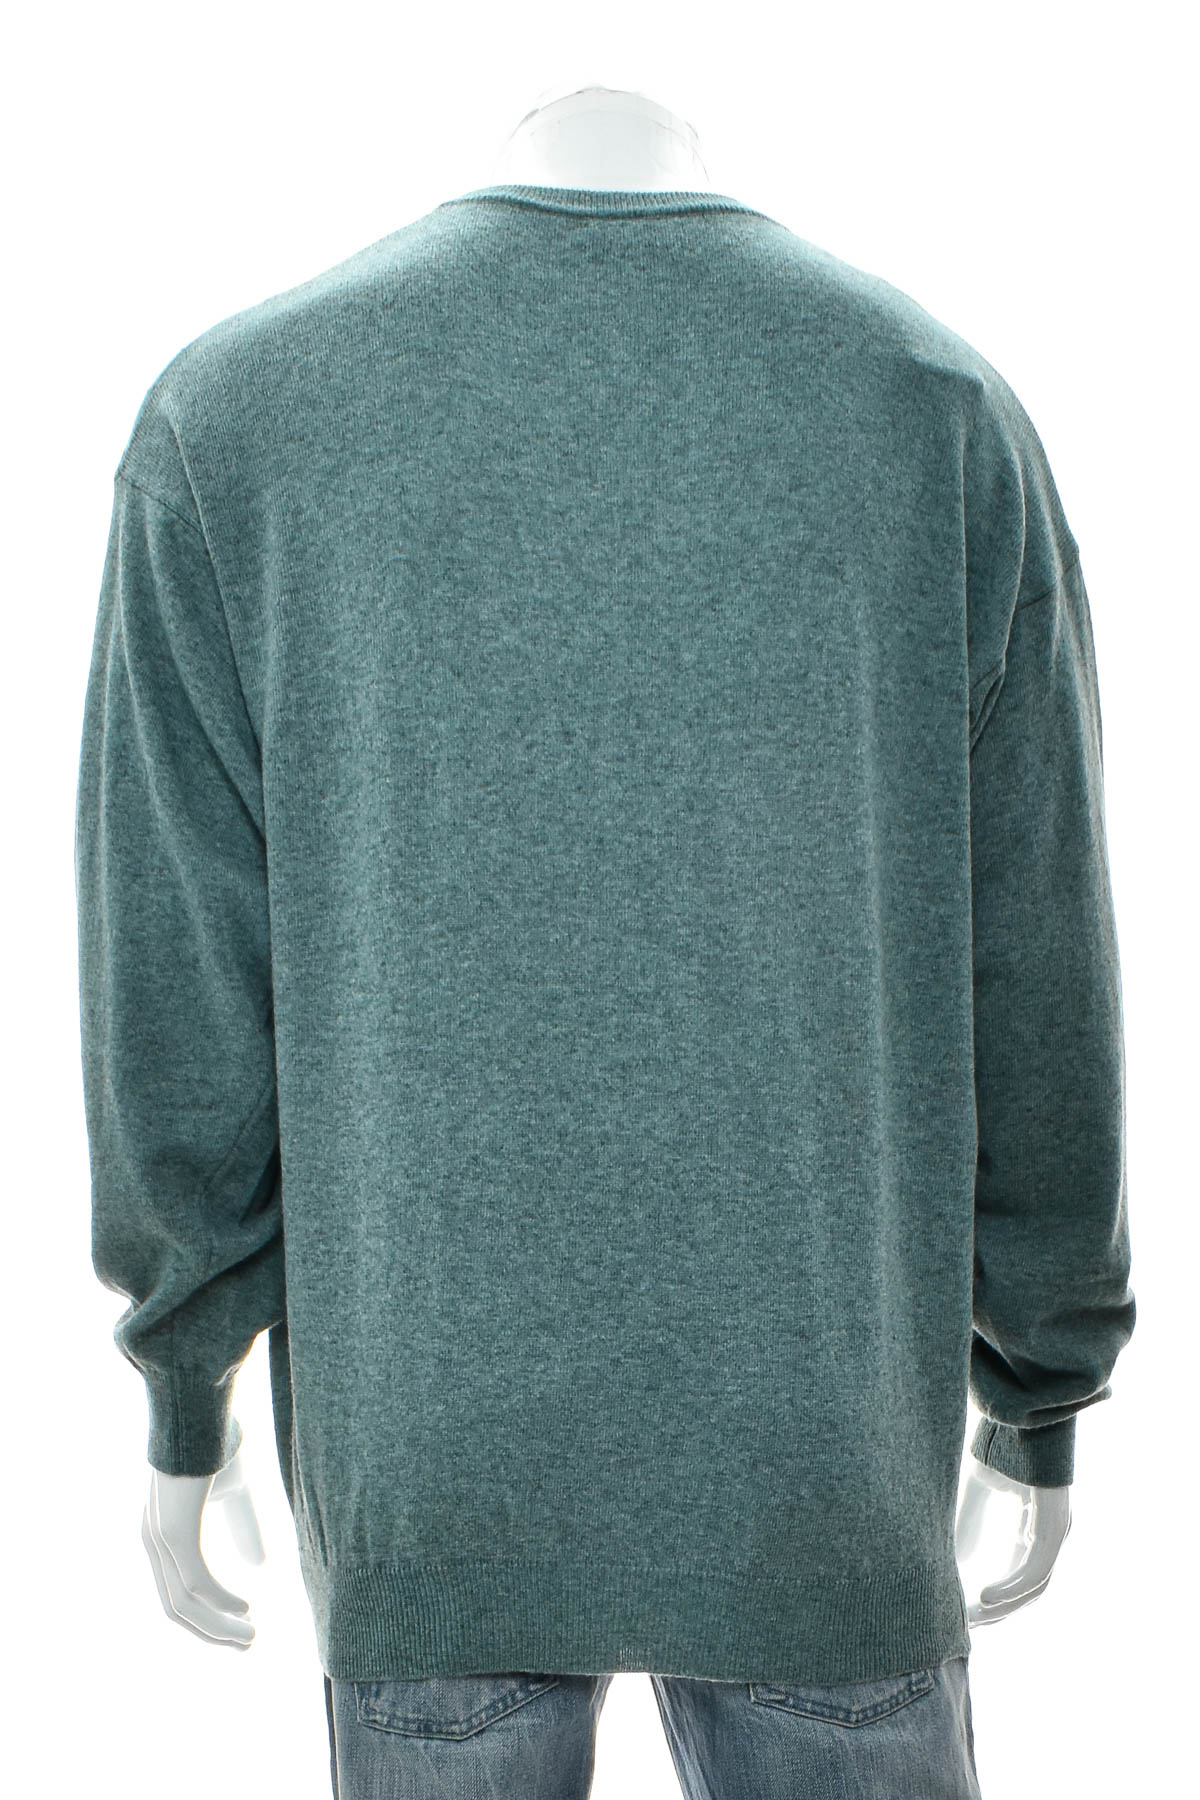 Men's sweater - United Colors of Benetton - 1